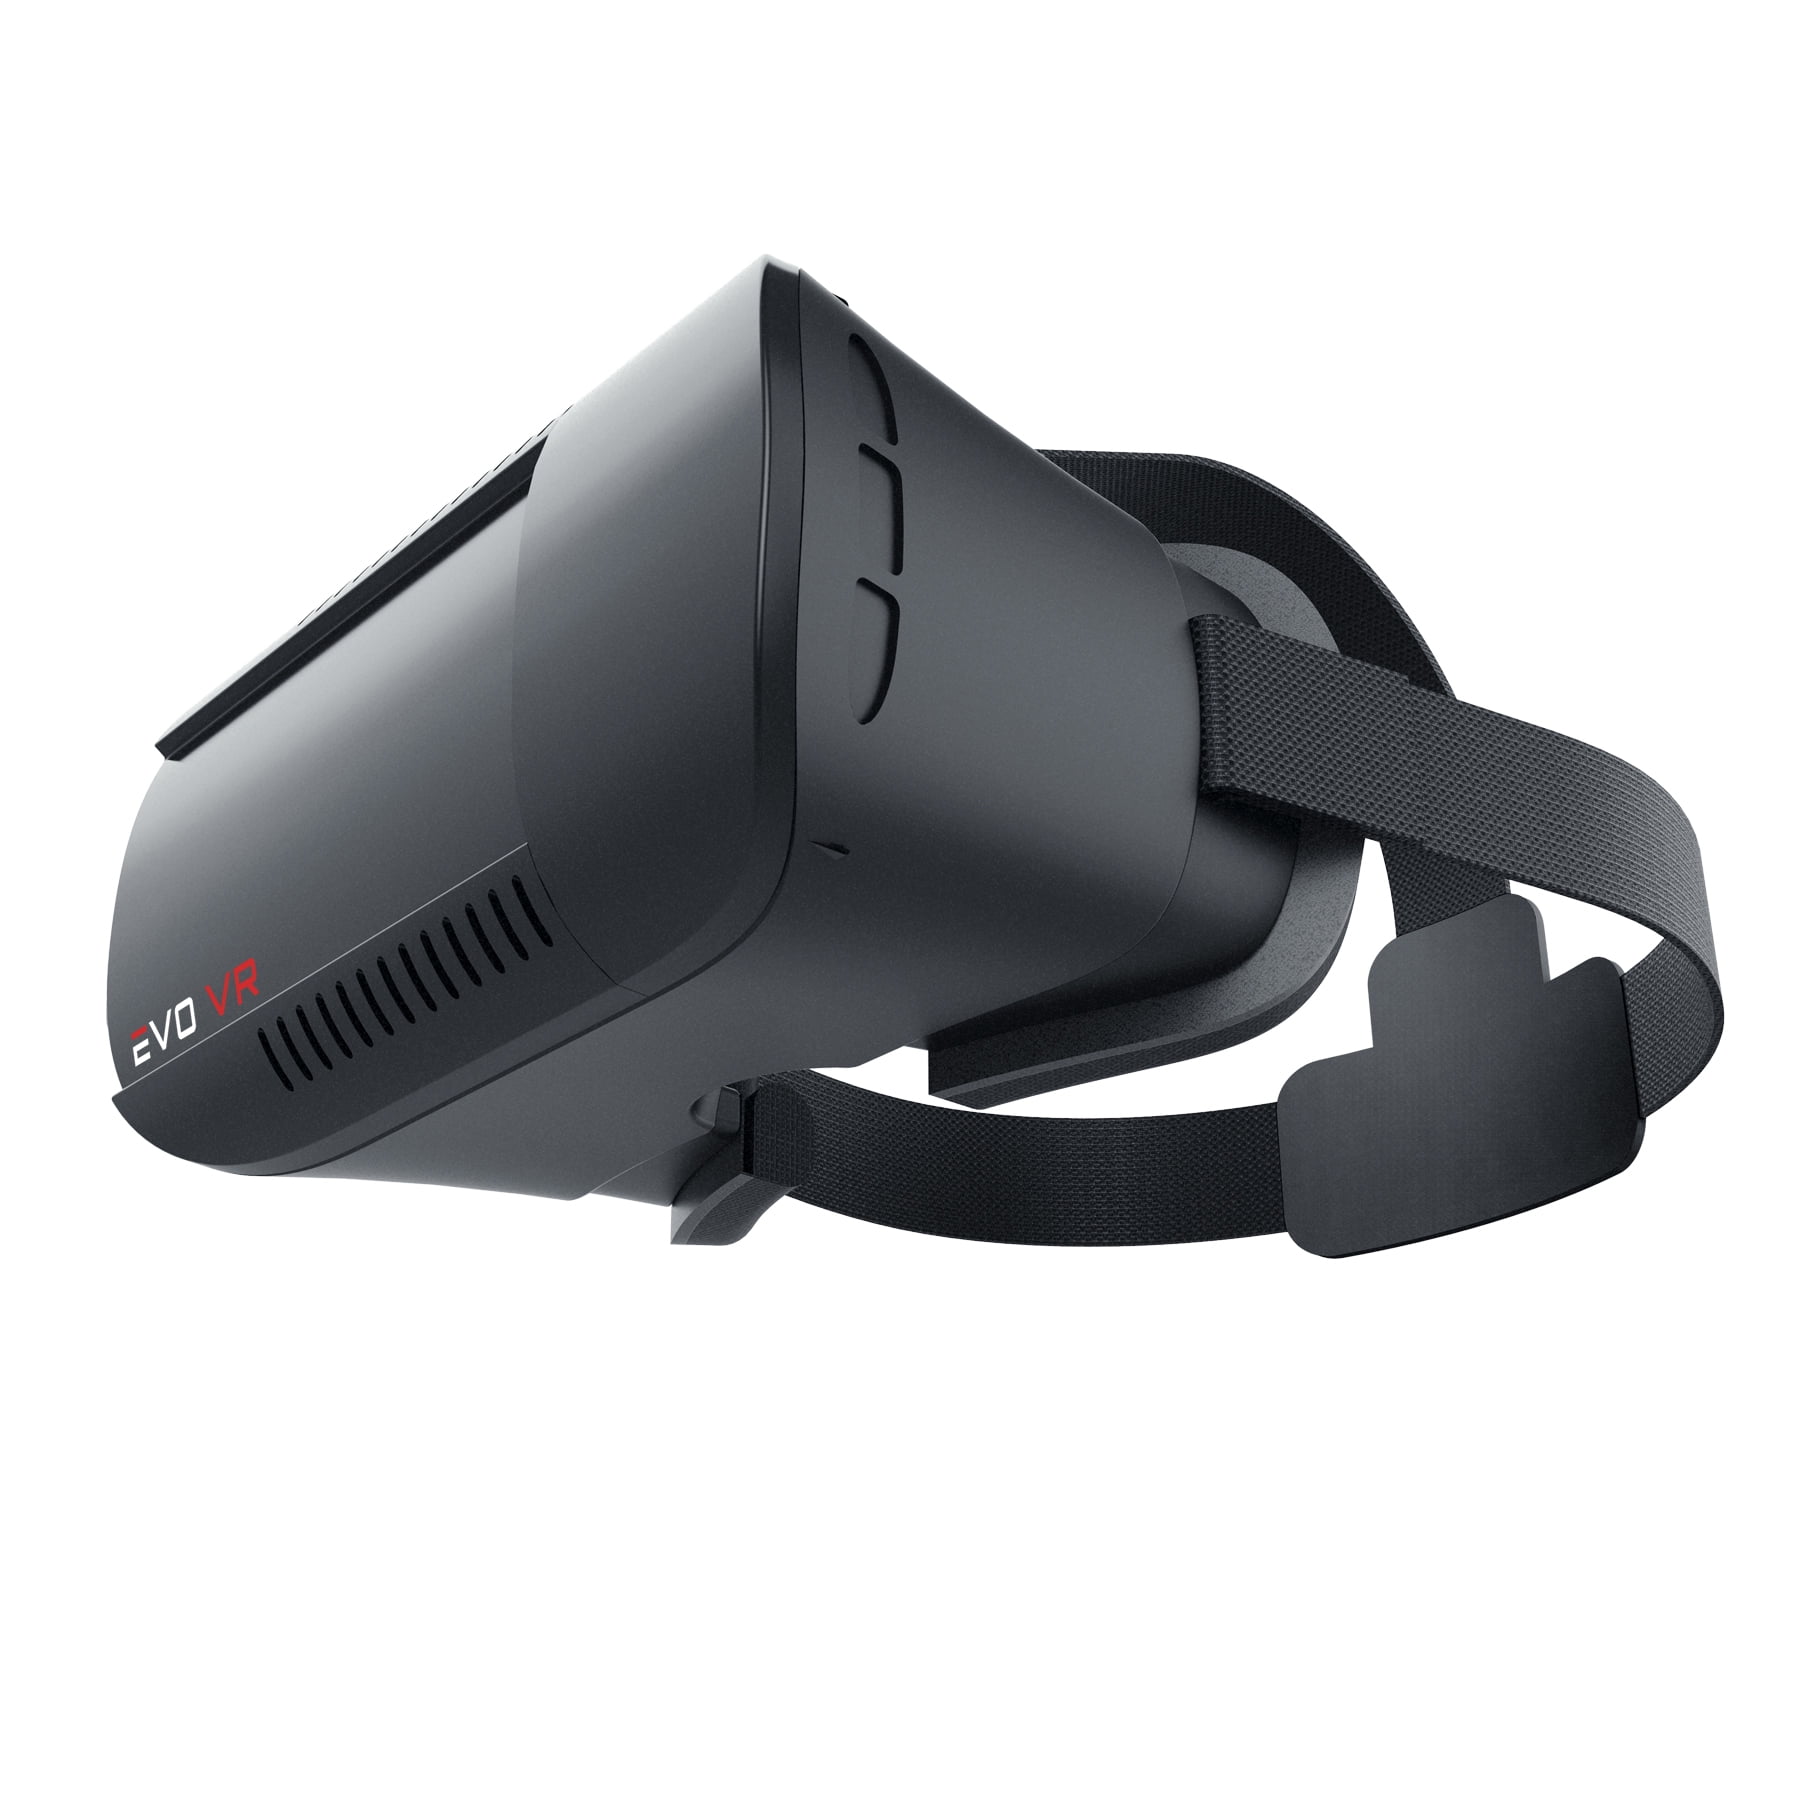 VR MI-VRH01-101 Evo Next Virtual Reality Headset